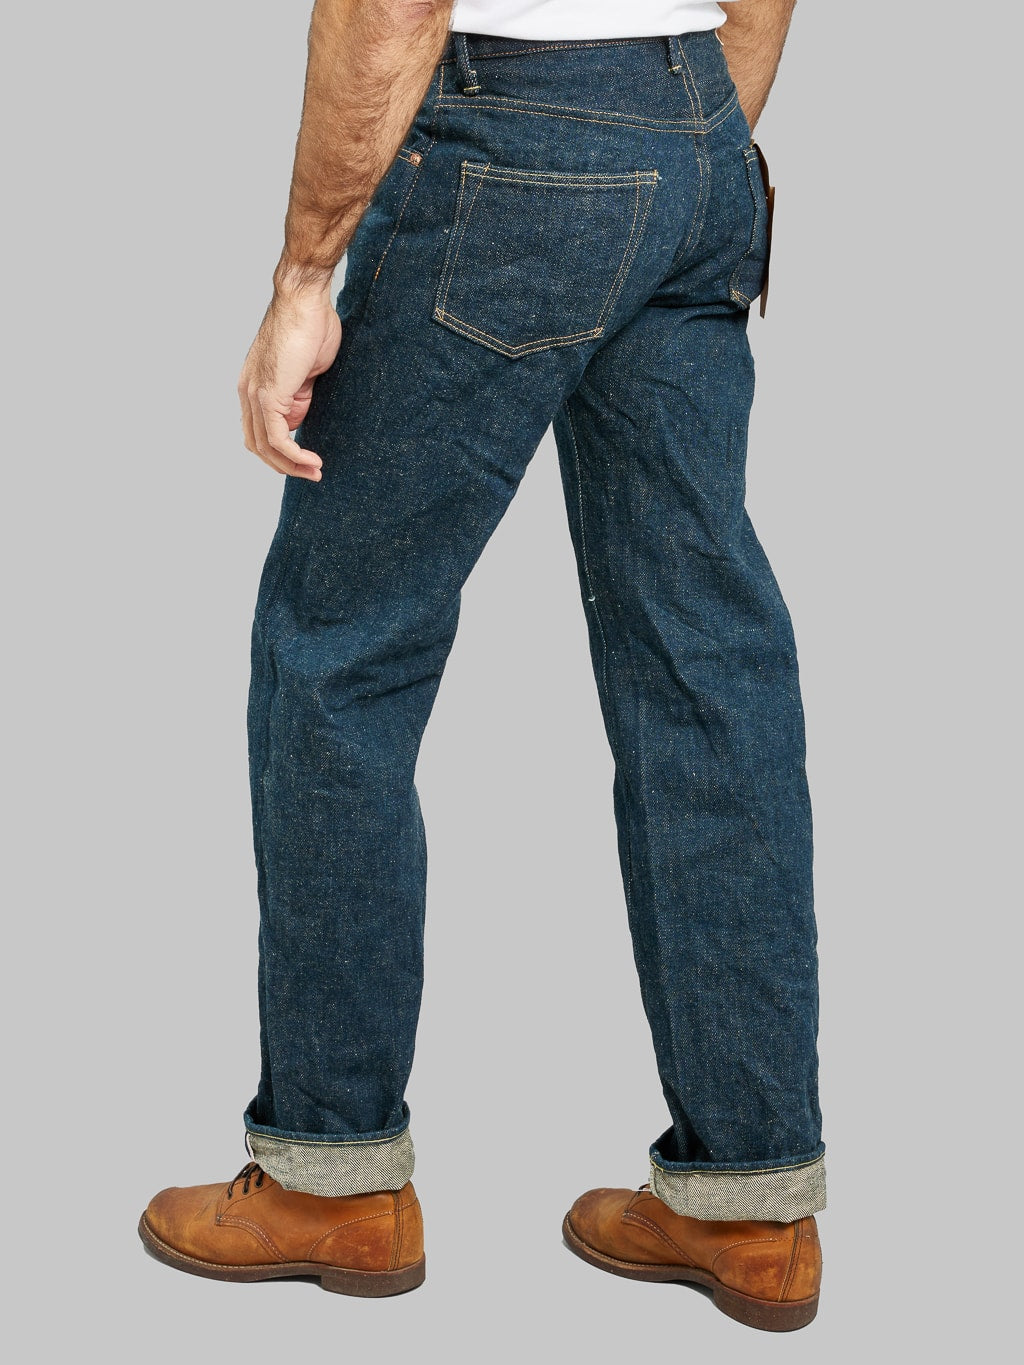 oni denim 200zr secret denim 20oz wide straight jeans back look